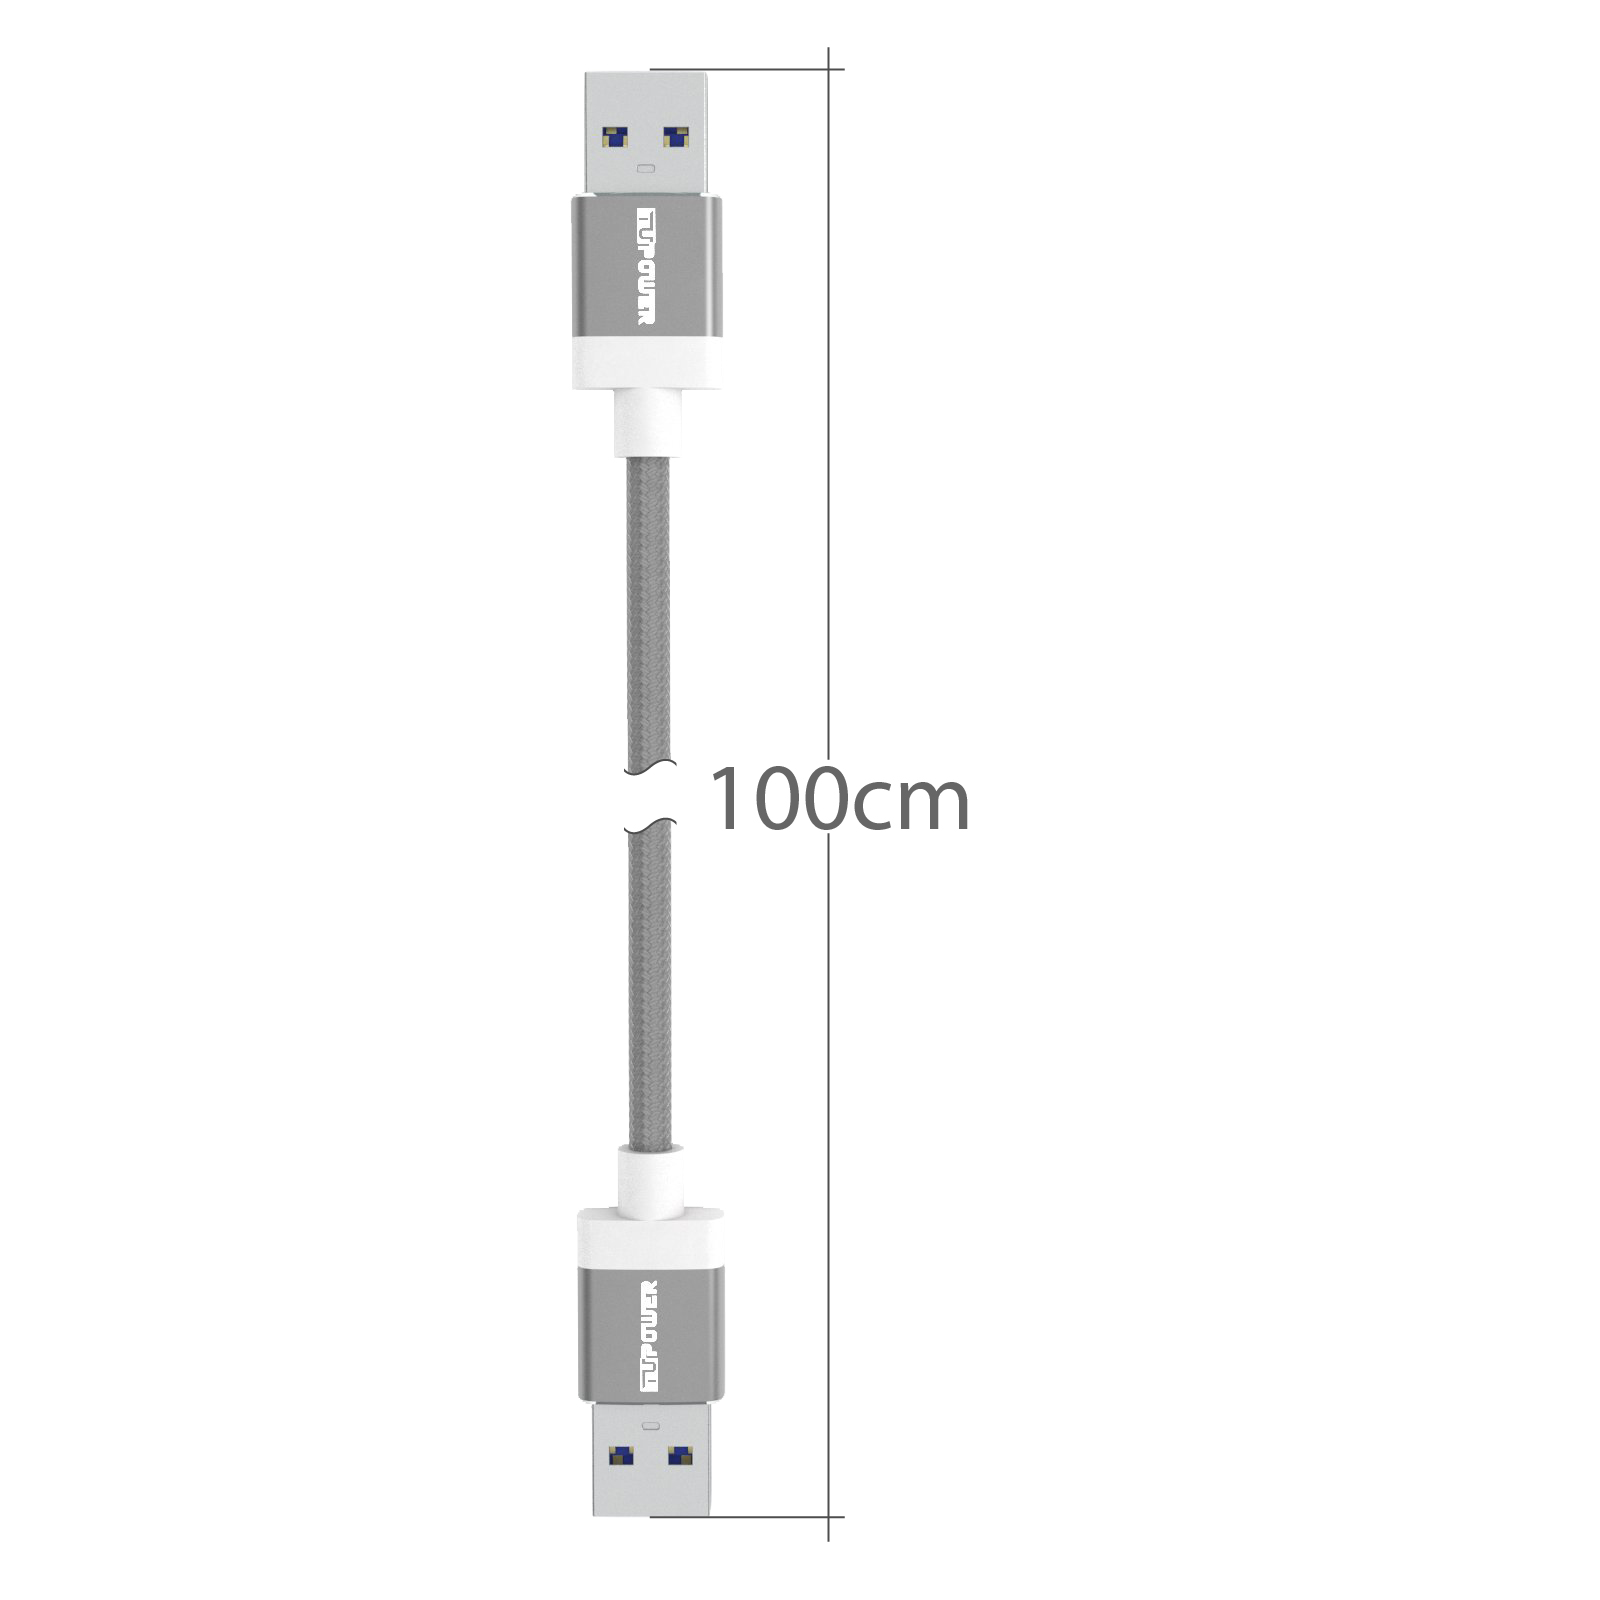 USB Kabel 3.0 USB Verbindung K56 Verbindungskabel 1m TUPOWER